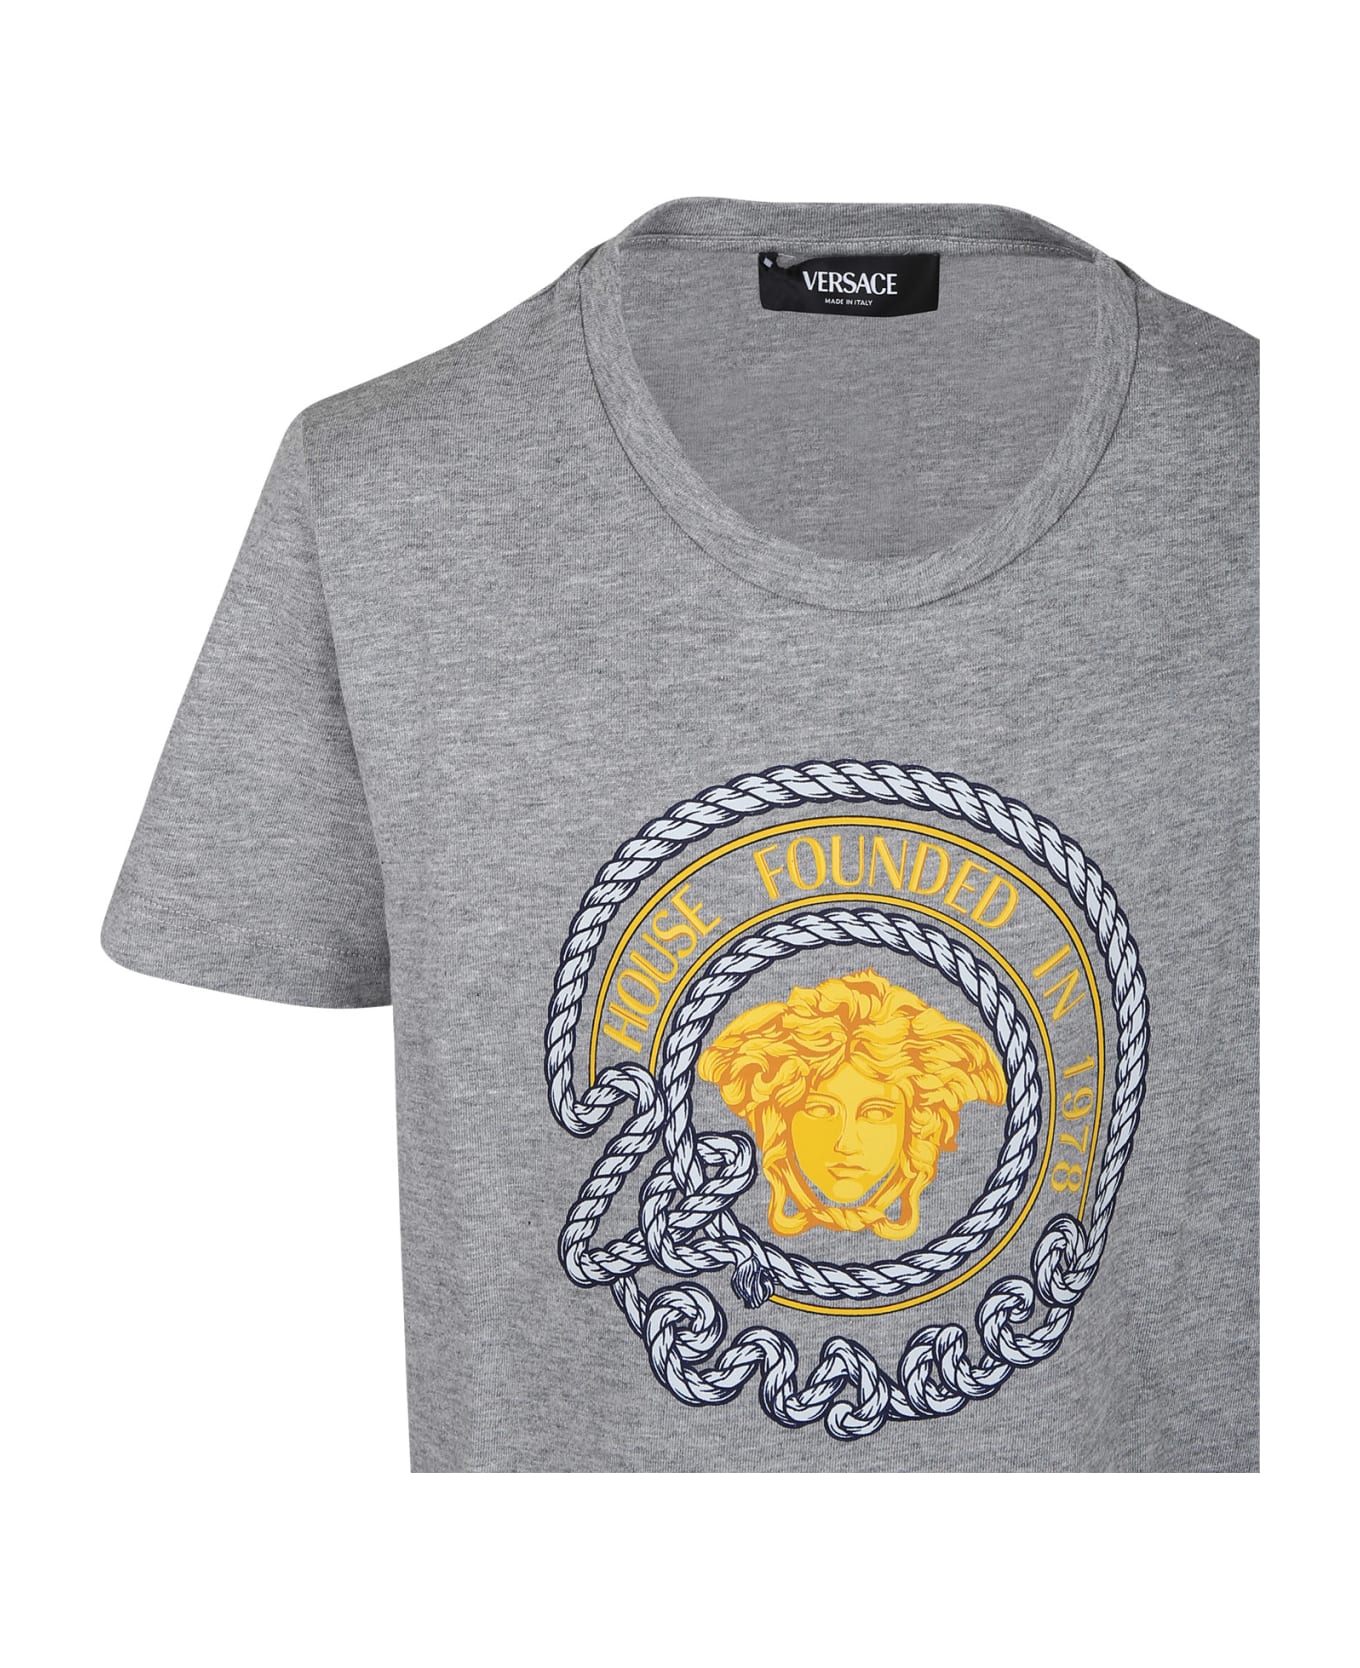 Versace Grey T-shirt For Boy With Medusa - Grey